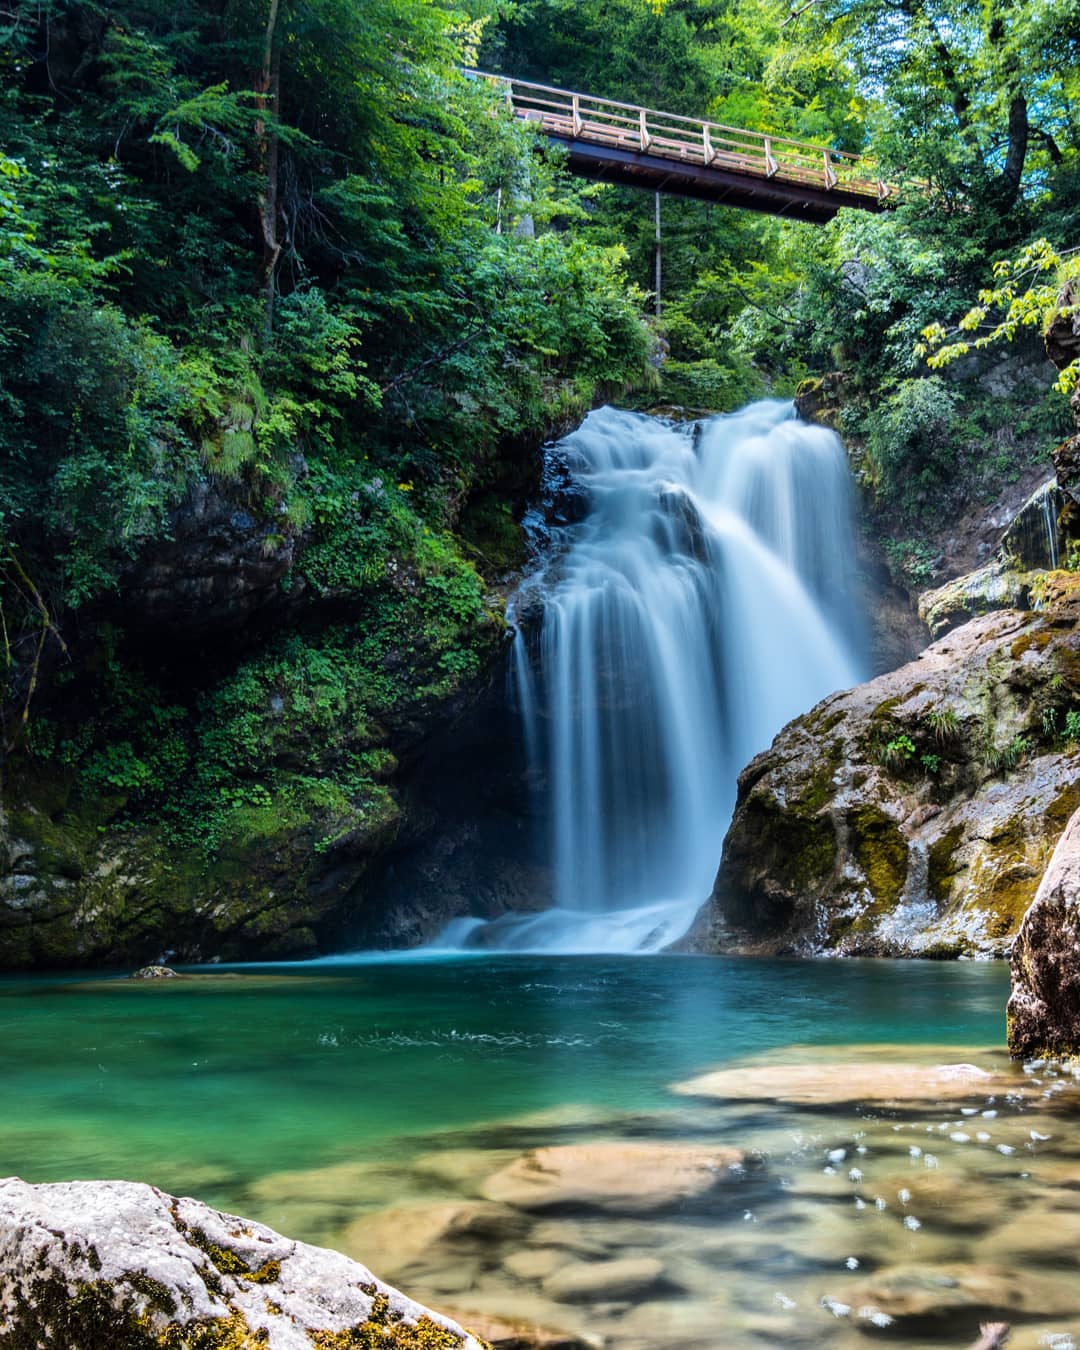 Enjoy 
.
.
.
.
.
.
.
.
.
.
.
.
.
.
.
.
.
.
.
.
.
.
.
.
.
.
.
.
.
.
.
.
.
.
.
.
#slovenia #ifeelslovenia #igslovenija #nature #travellingthroughtheworld #instagood #naturephotography #igslovenija #slovenija #wanderlust #waterfall #roadtrip #naturelovers #travelgram #photooftheday #visitslovenia #slovenia_ig #igersslovenia #exploreslovenia #thisisslovenia #aufocommunity #ig_slovenia #discoverslovenia #feelslovenia